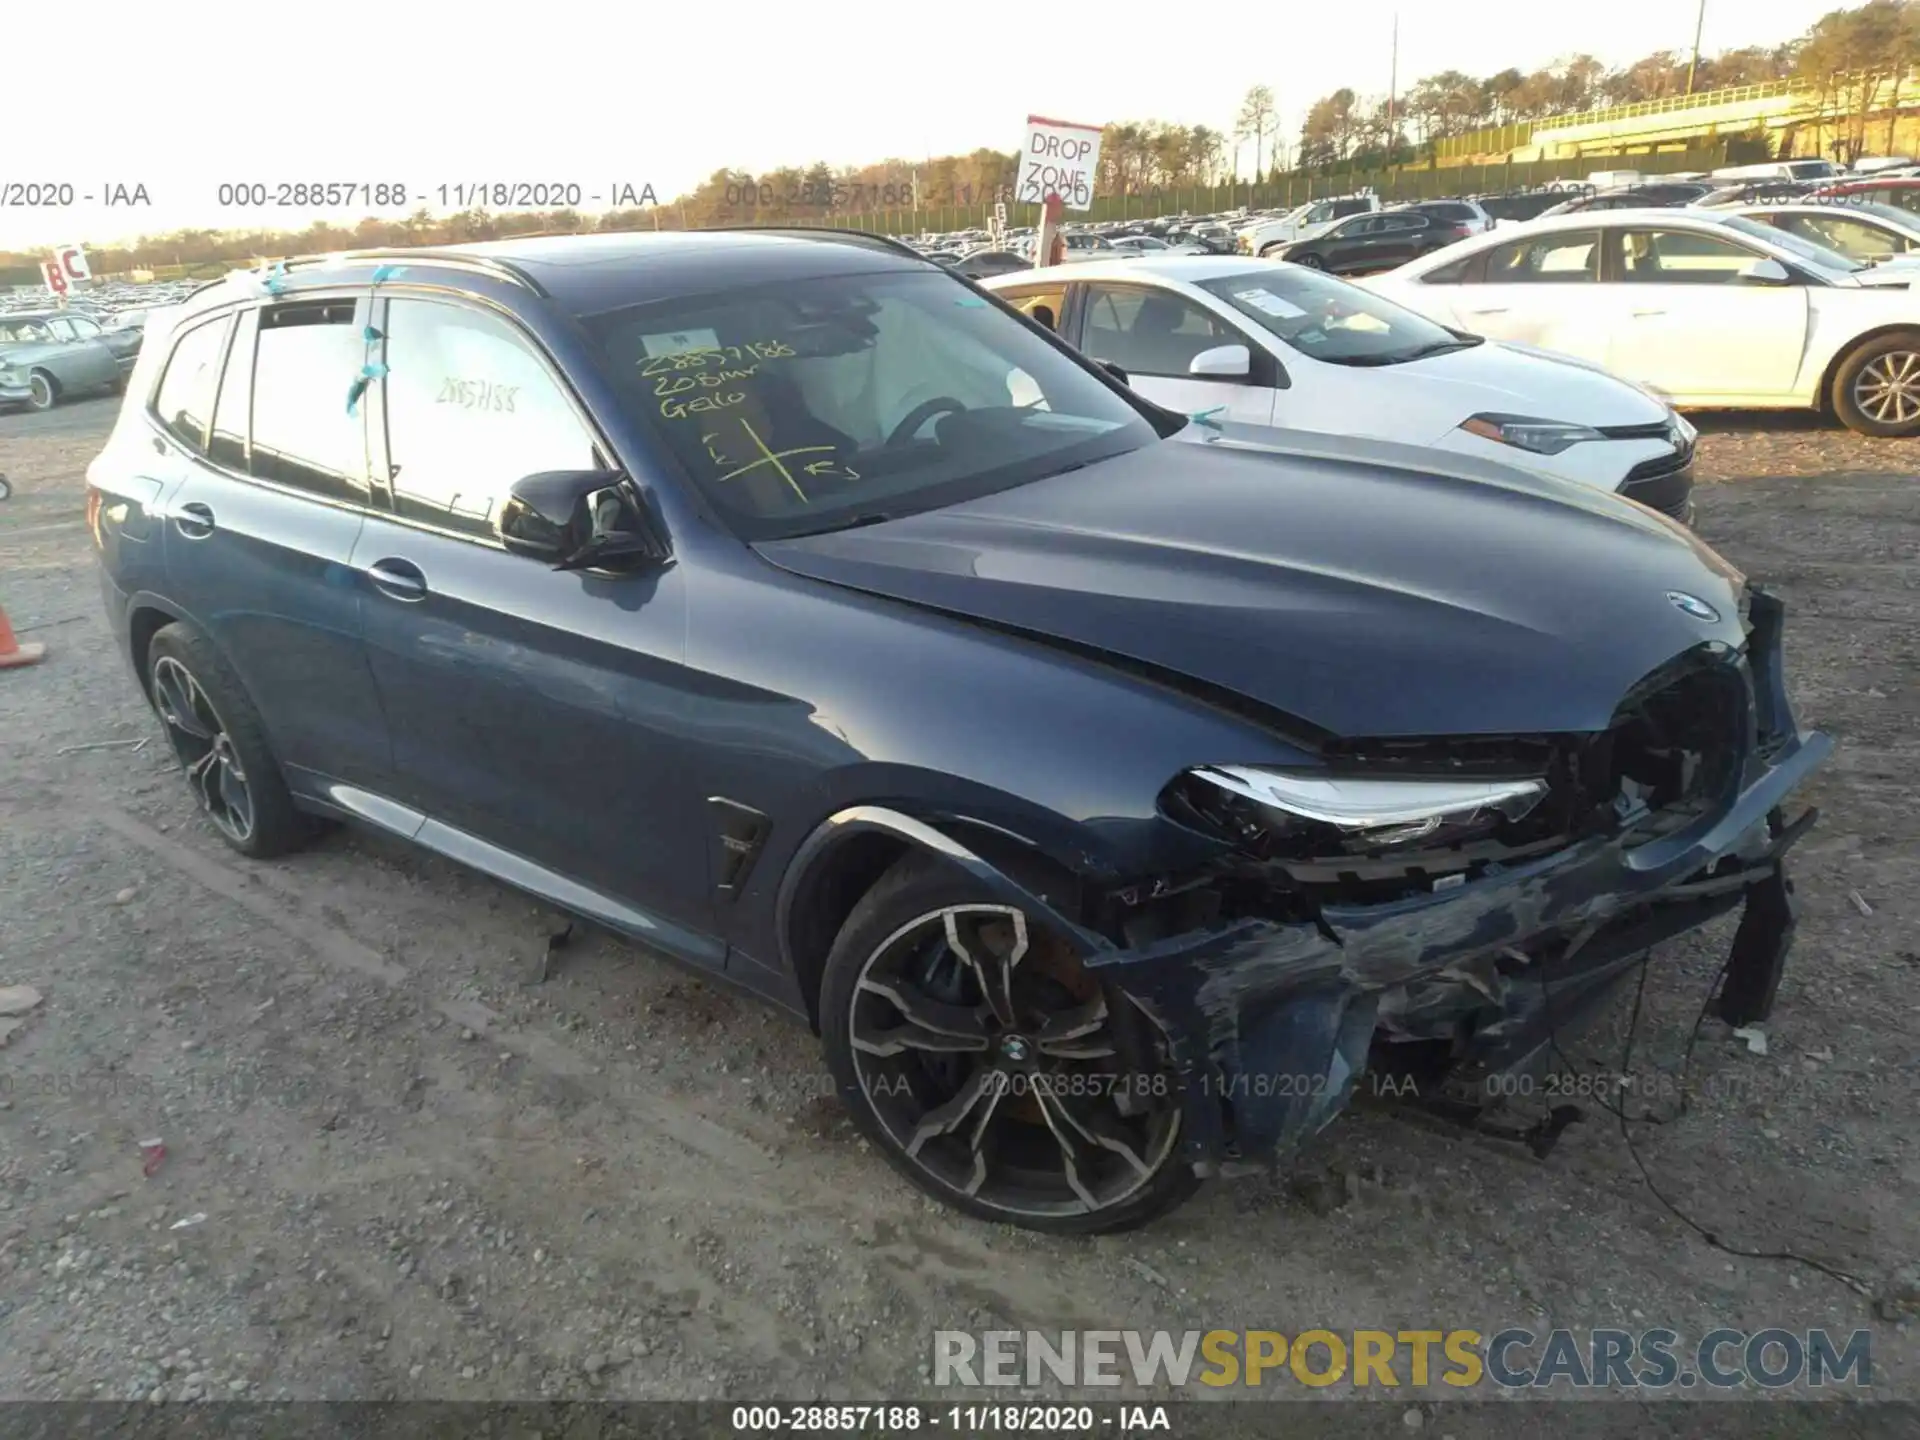 1 Фотография поврежденного автомобиля 5YMTS0C09L9B70144 BMW X3 M 2020